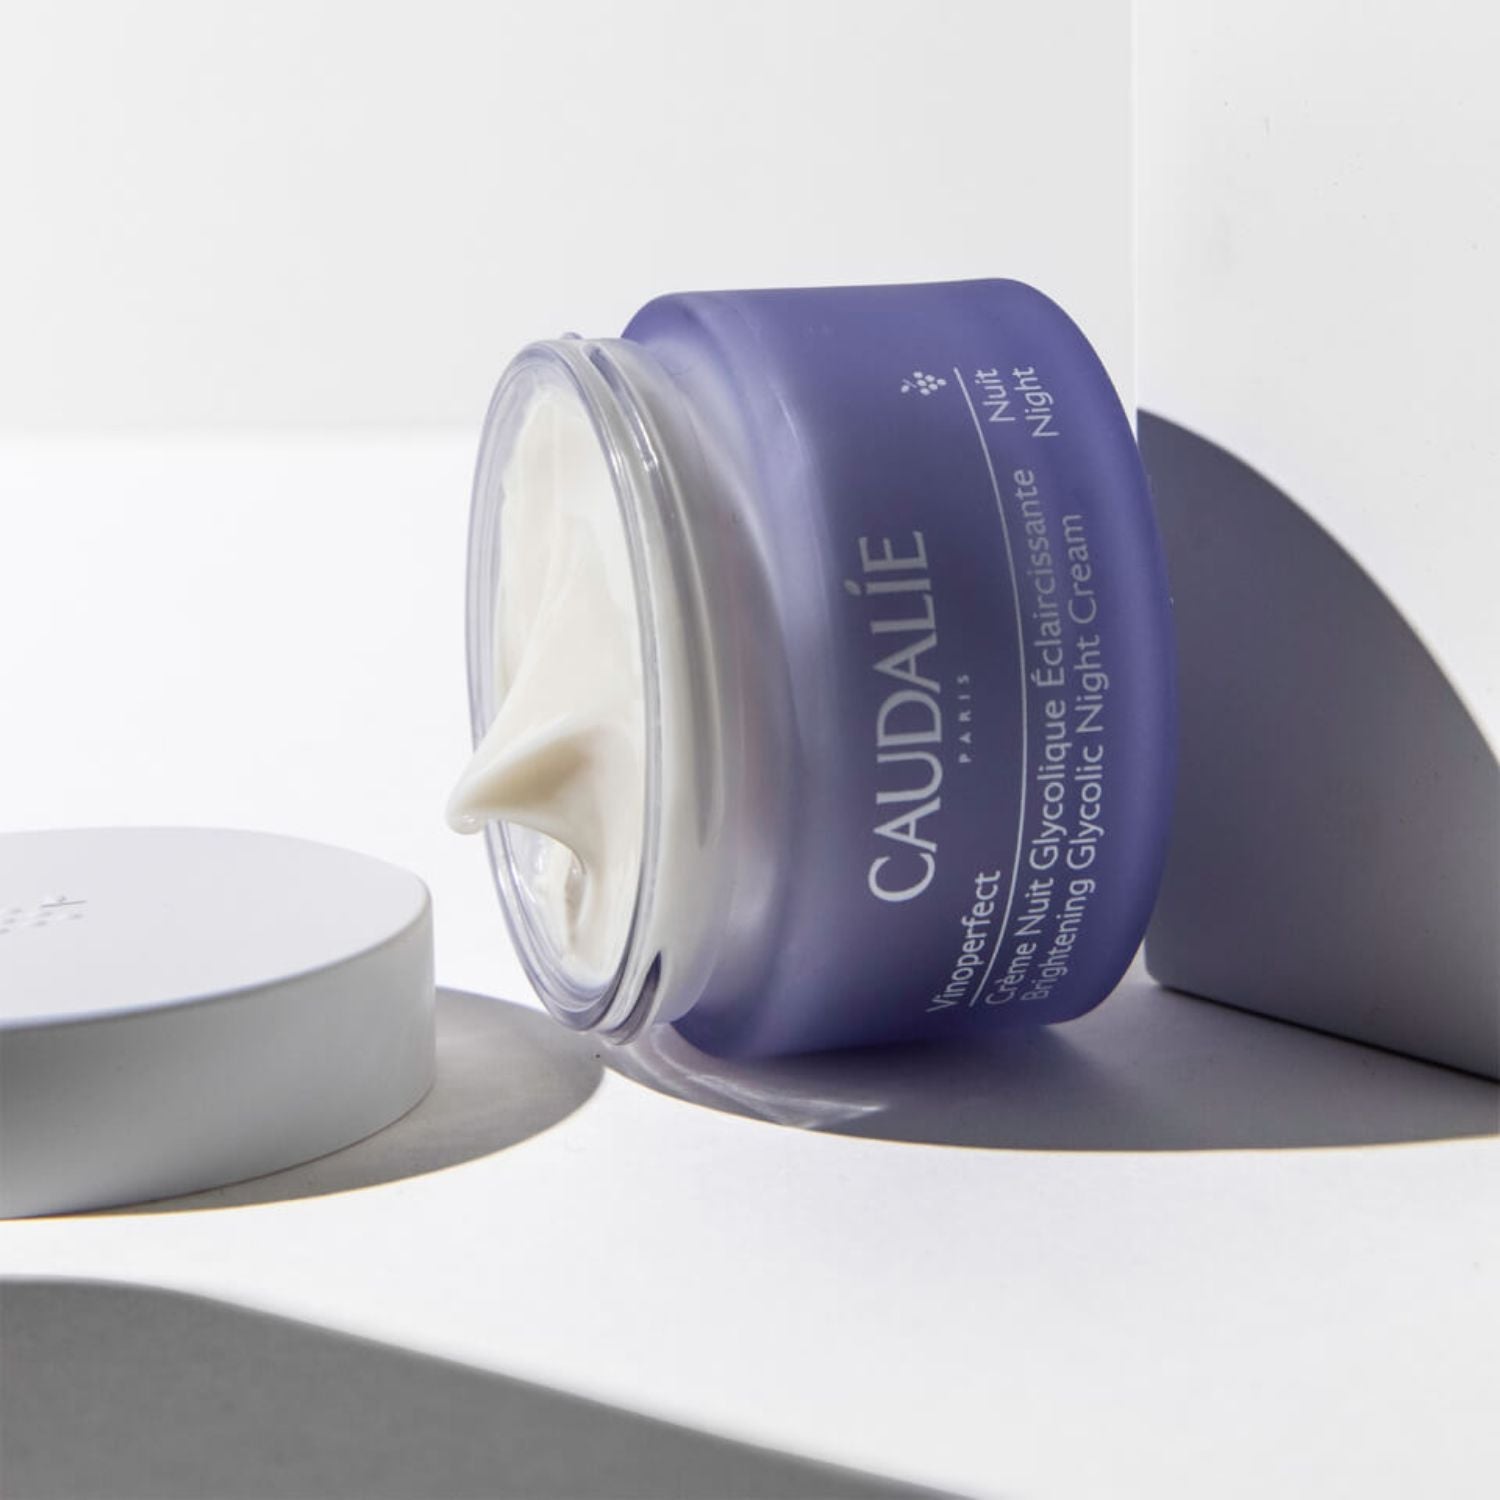 Caudalie Caudalie | Vinoperfect Dark Spot Correcting Glycolic Night Cream 50ml - SkinShop